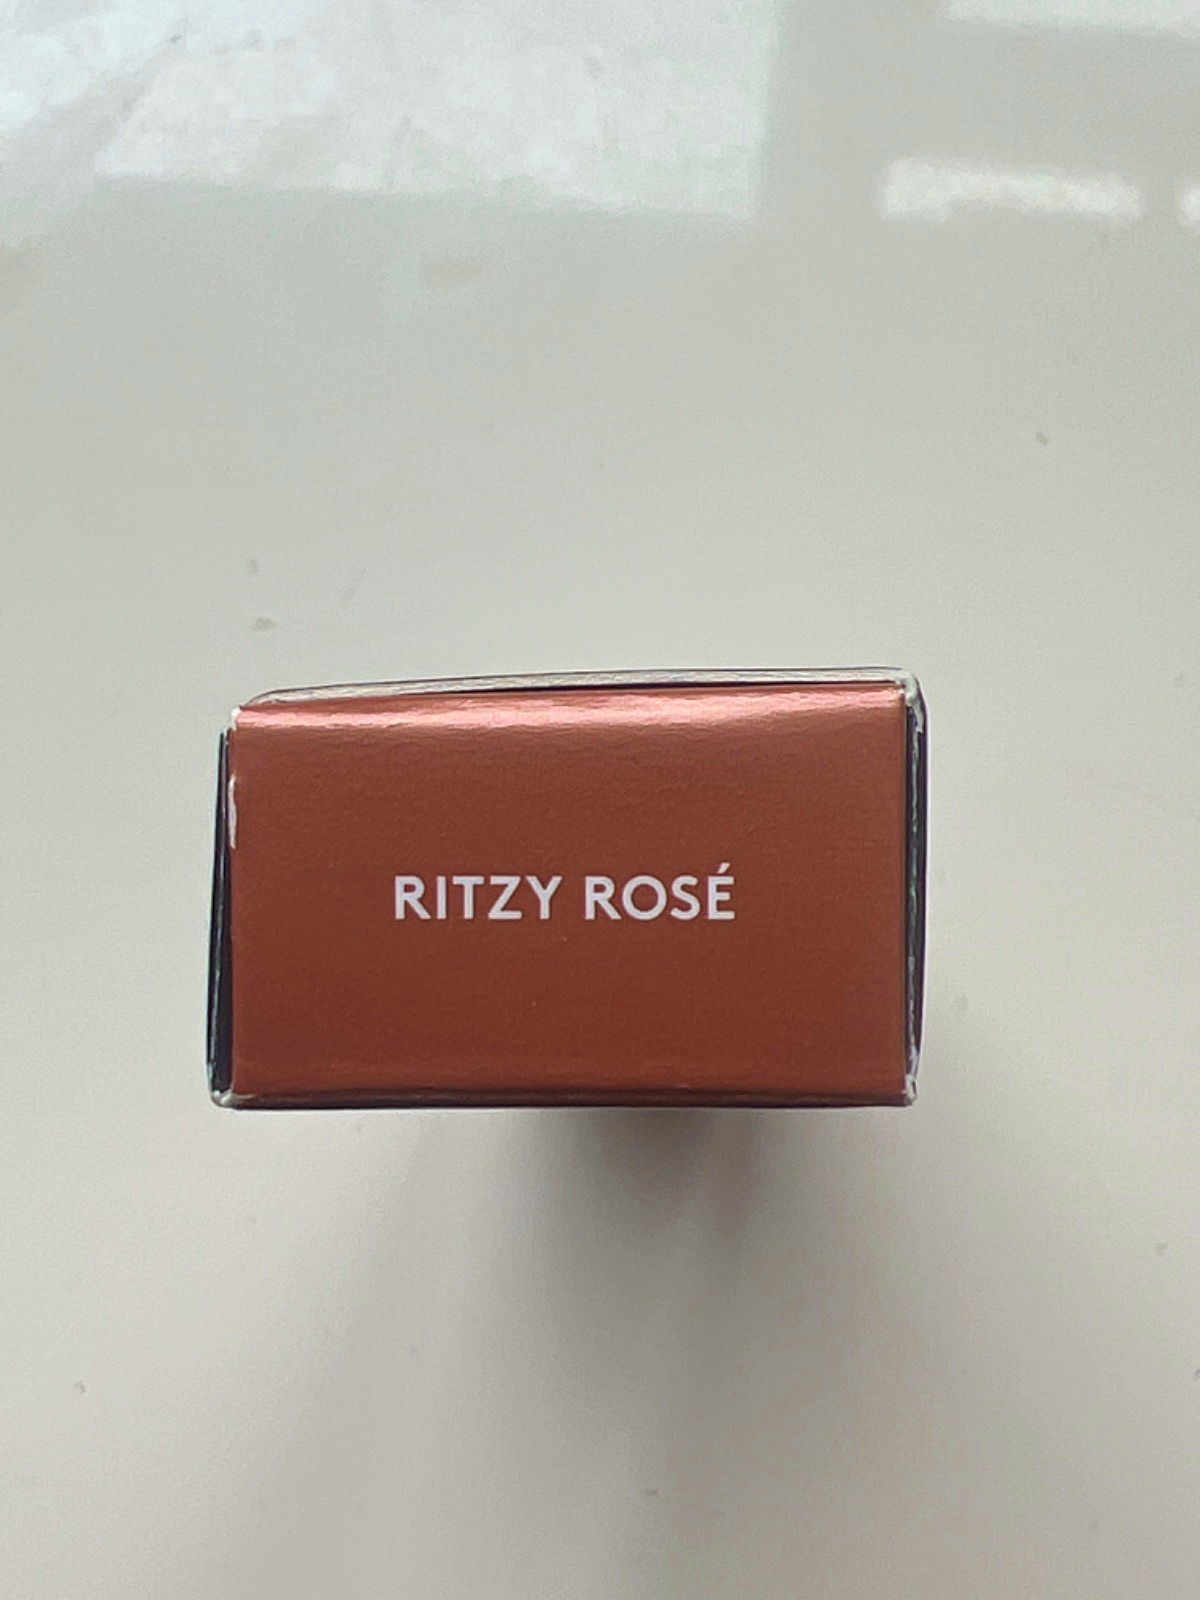 Fenty Beauty Glitsty Lid Shimmer Liquid Eyeliner Ritzy Rosé 3.3 ml